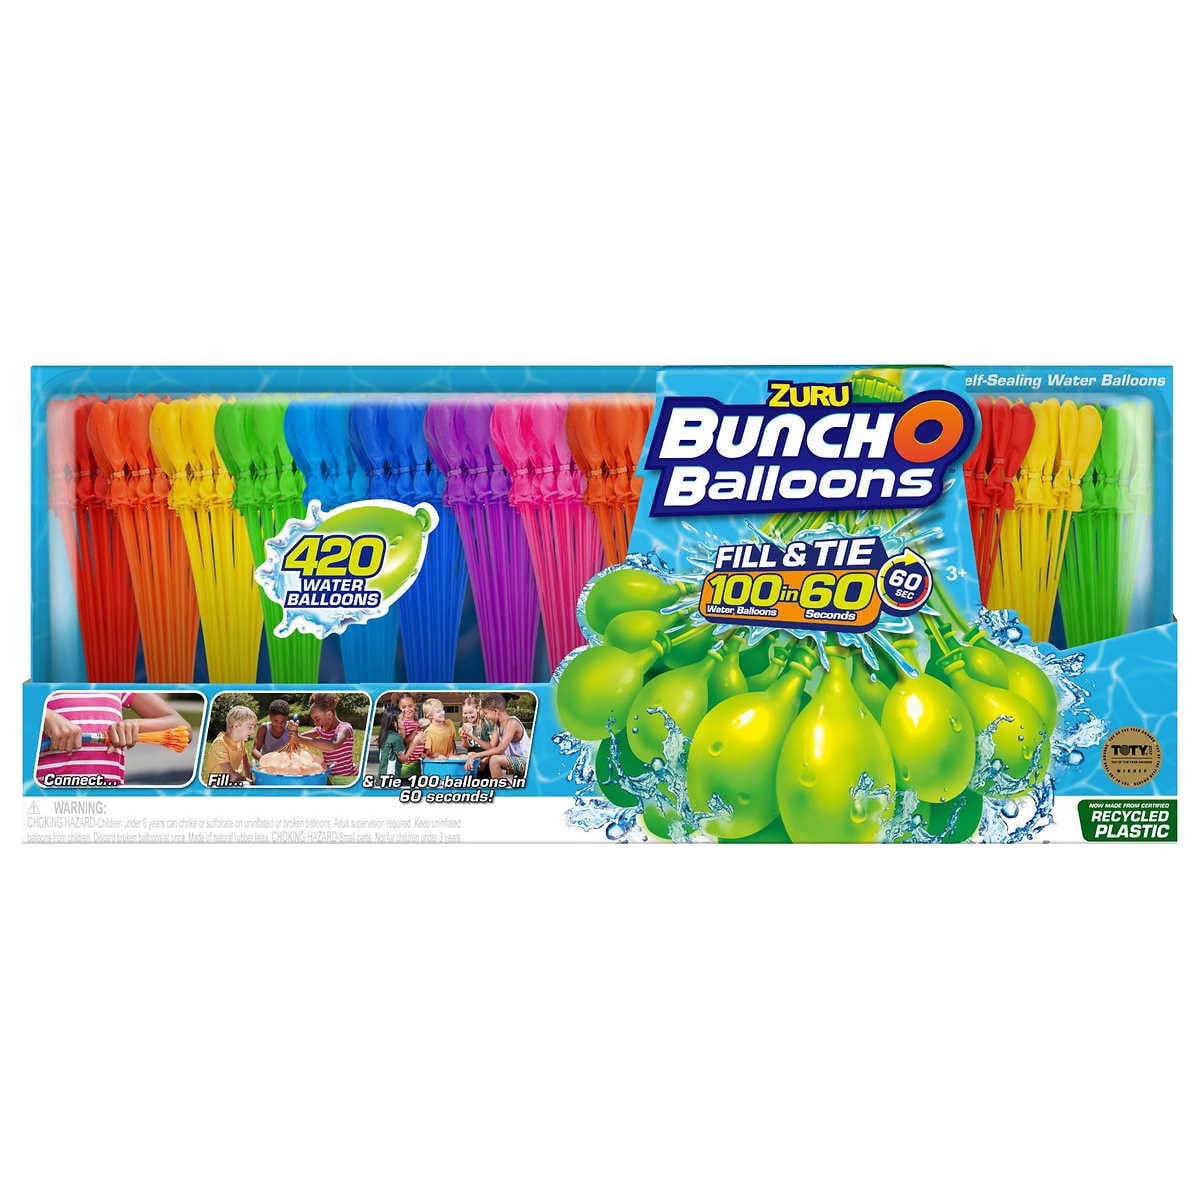 Brown/a Bunch O Balloons Zuru 420 Instant Self Sealing Water Balloons 